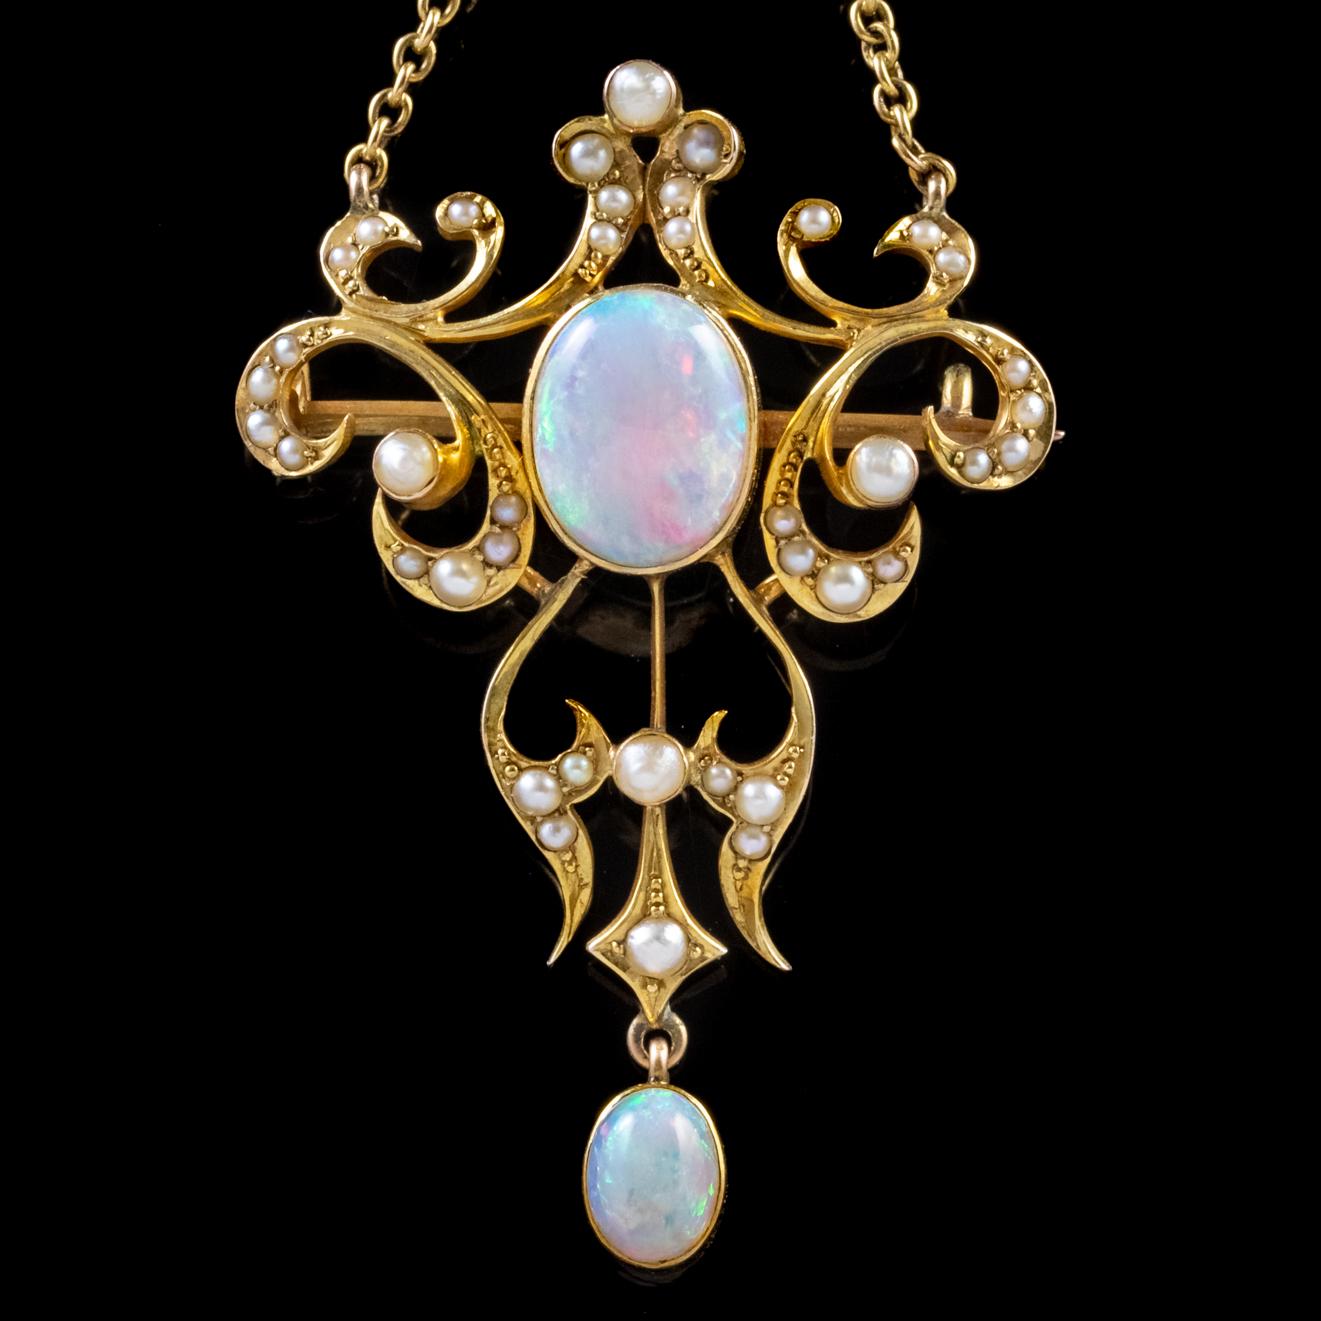 Antique Victorian Natural Opal Pendant Necklace 18 Carat Gold, circa 1880 For Sale 1